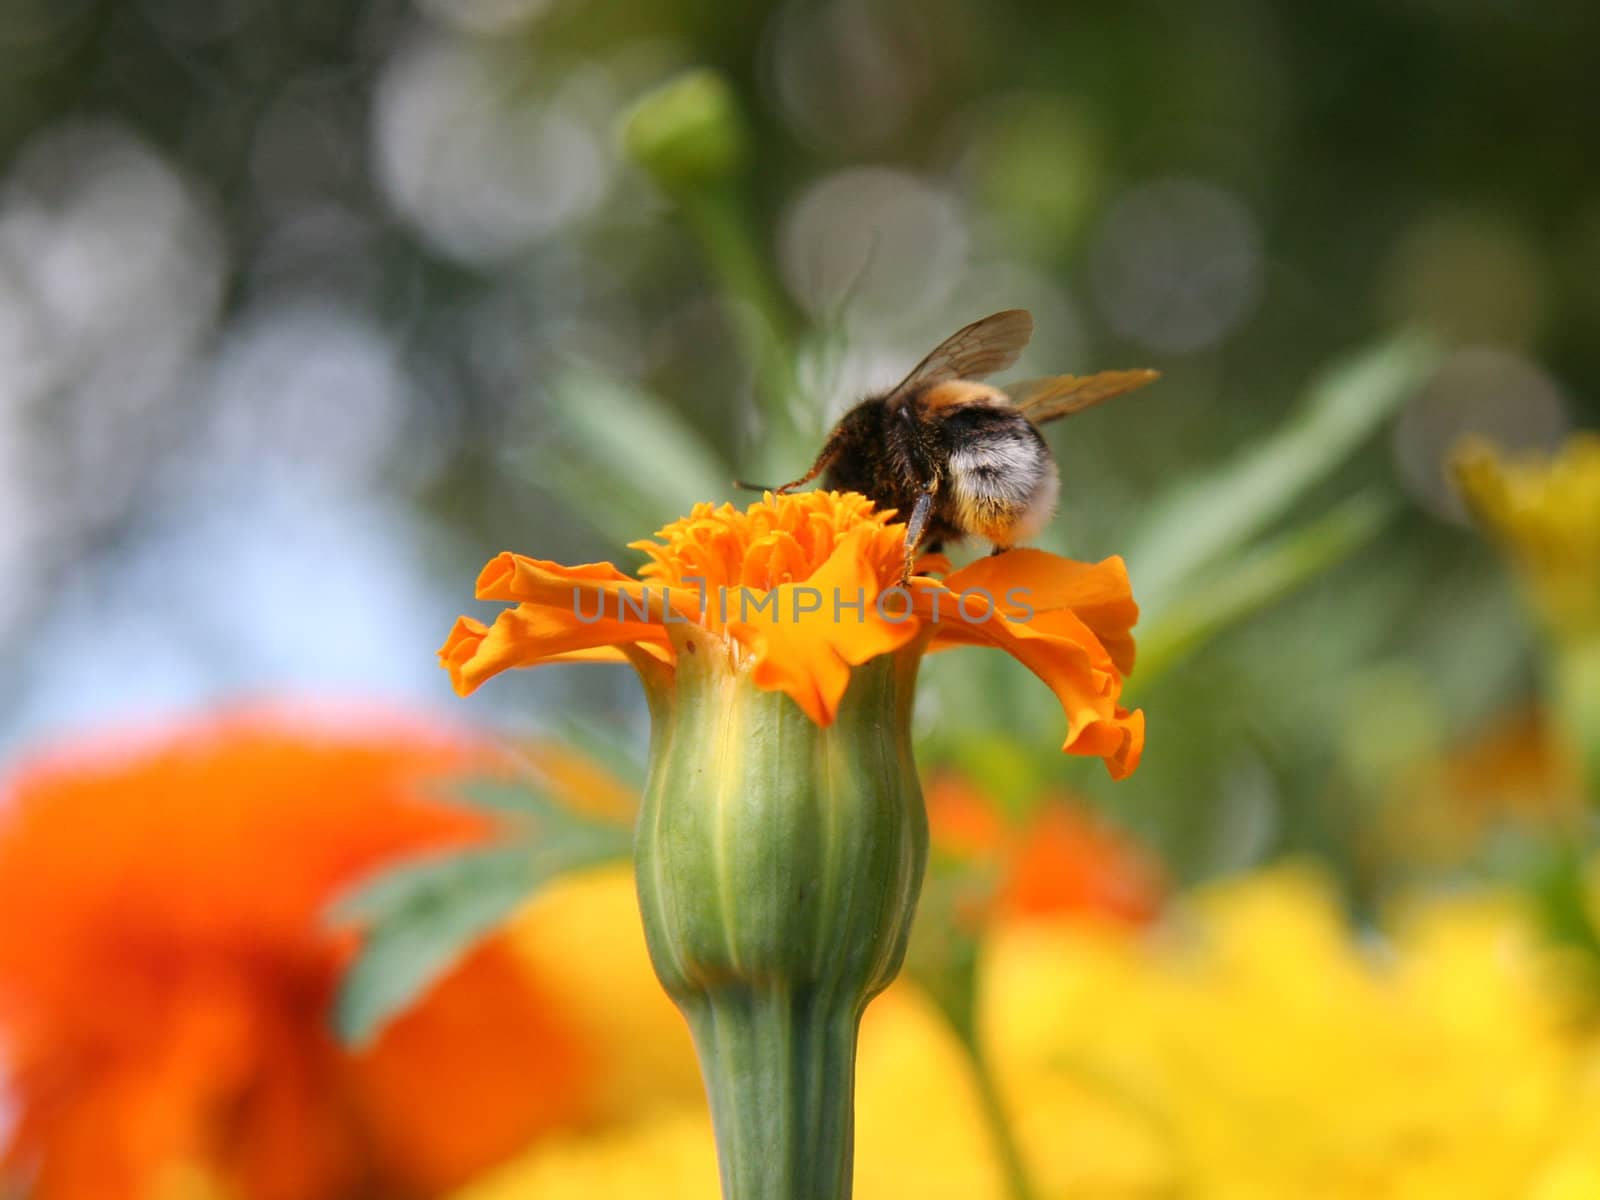 Gadfly on orange flower.